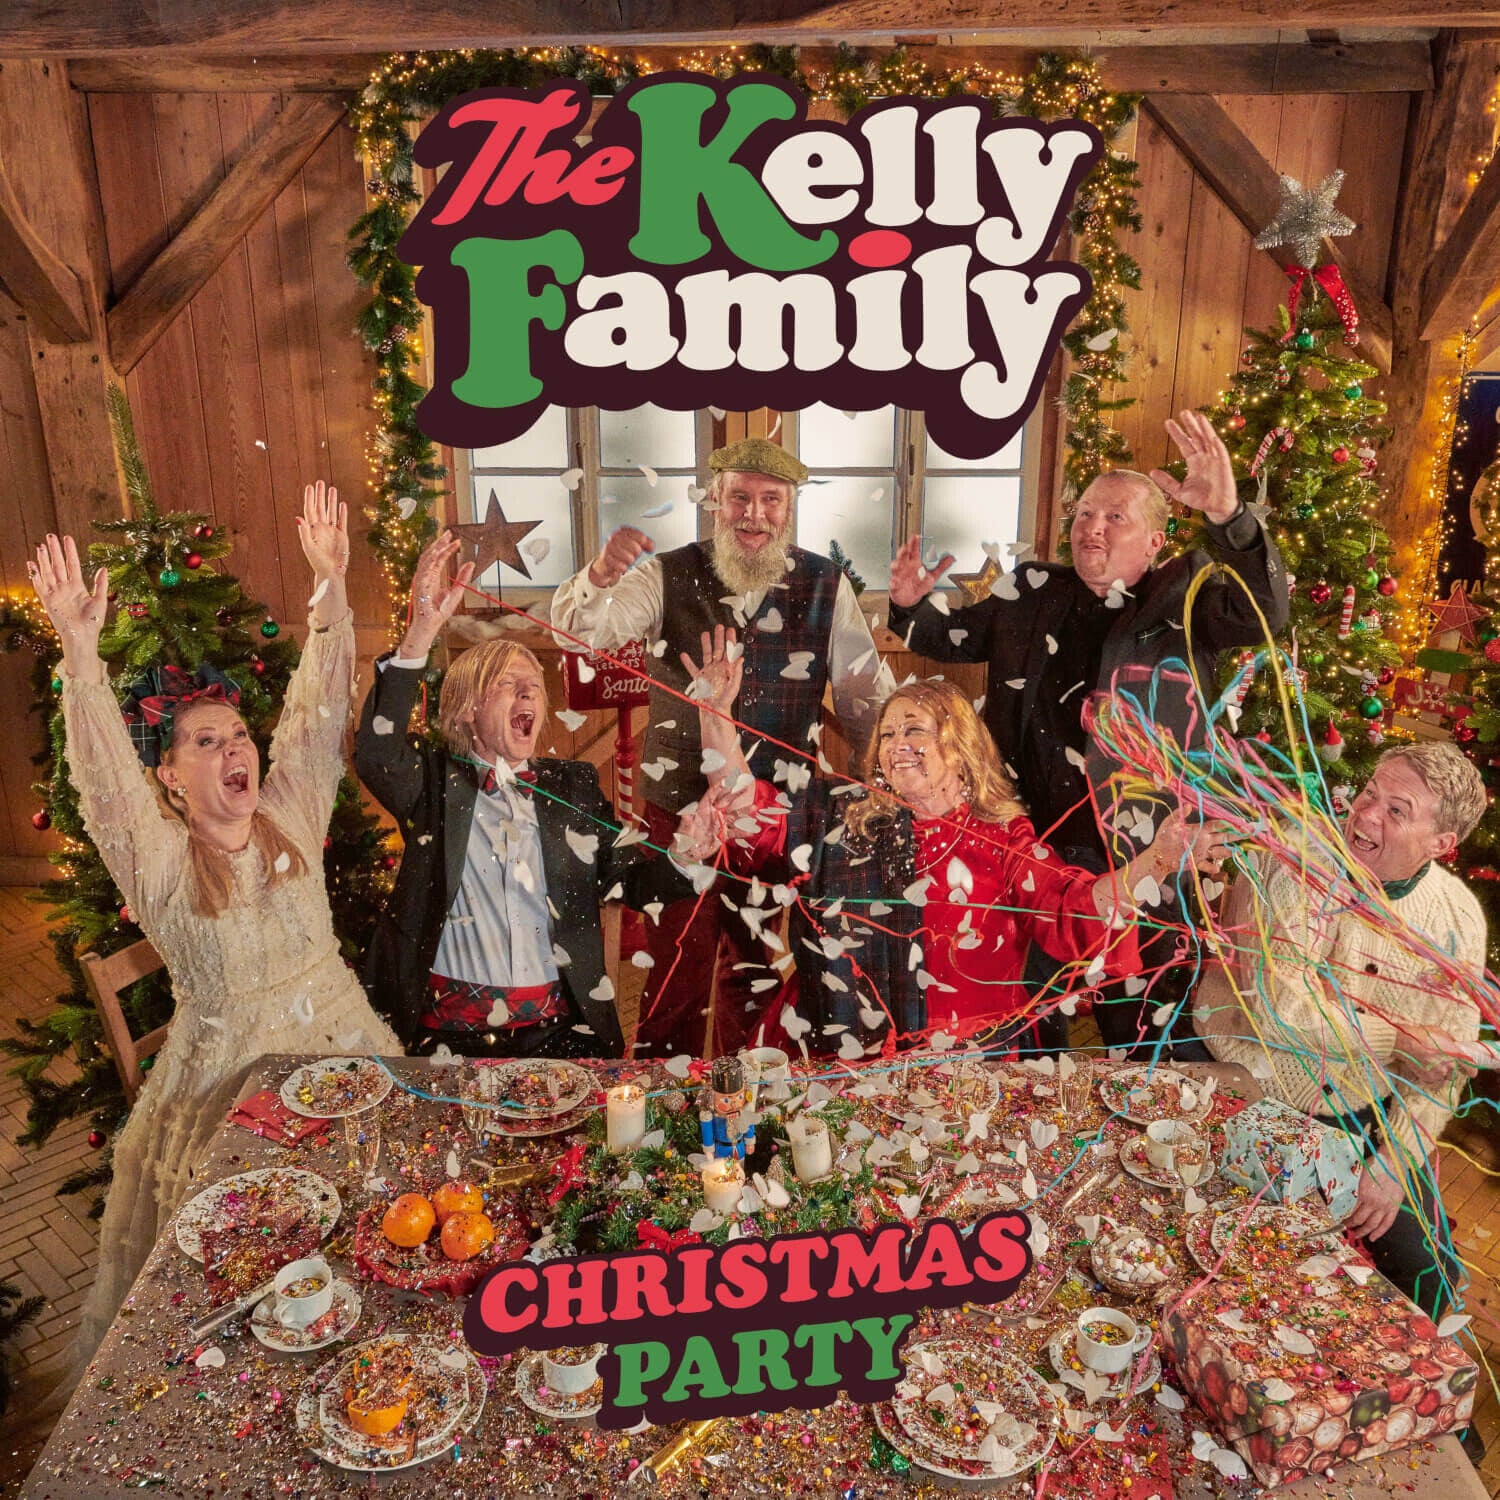 https://images.bravado.de/prod/product-assets/product-asset-data/kelly-family-the/kelly-family/products/139885/web/324778/image-thumb__324778__3000x3000_original/The-Kelly-Family-Christmas-Party-CD-139885-324778.jpg